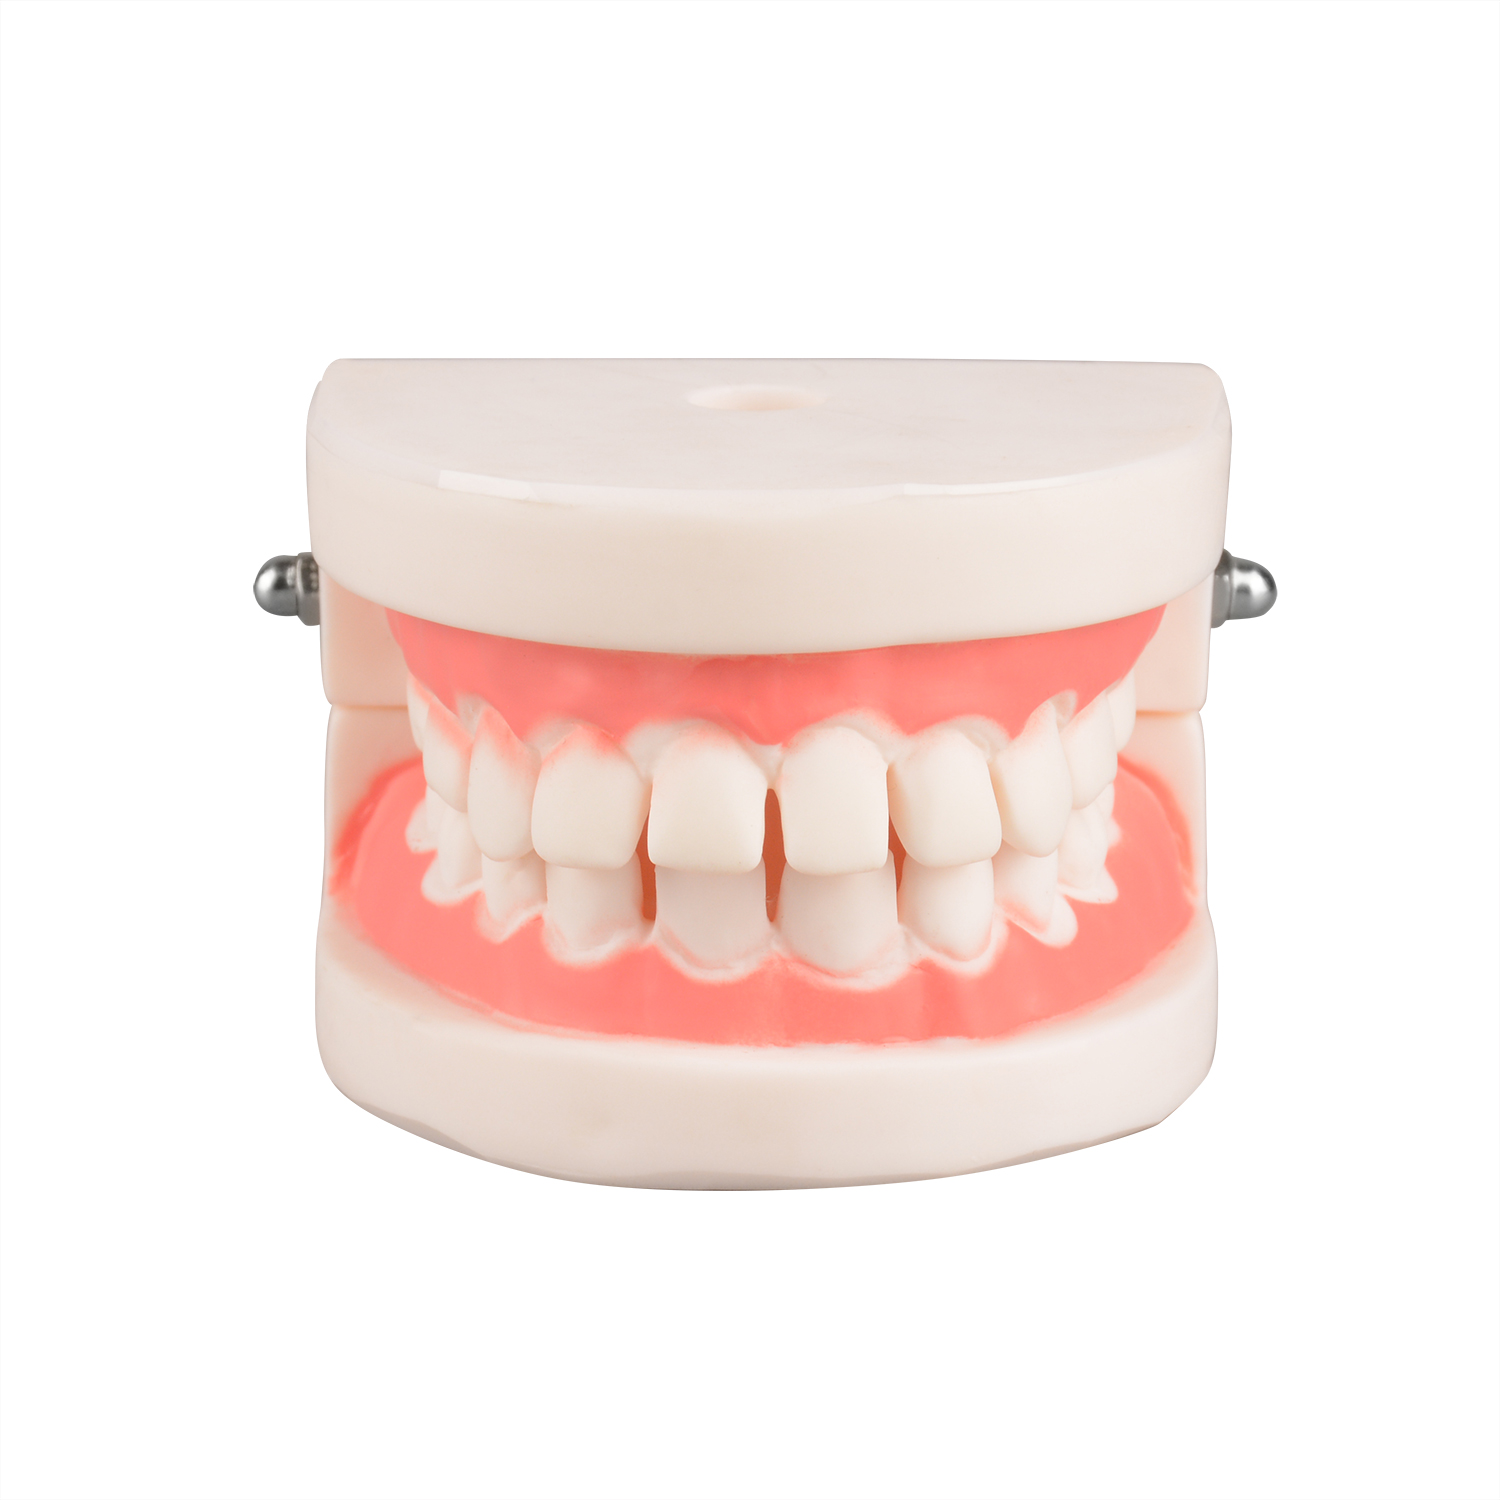 Gap Tooth Model Child for Children's Dentistry